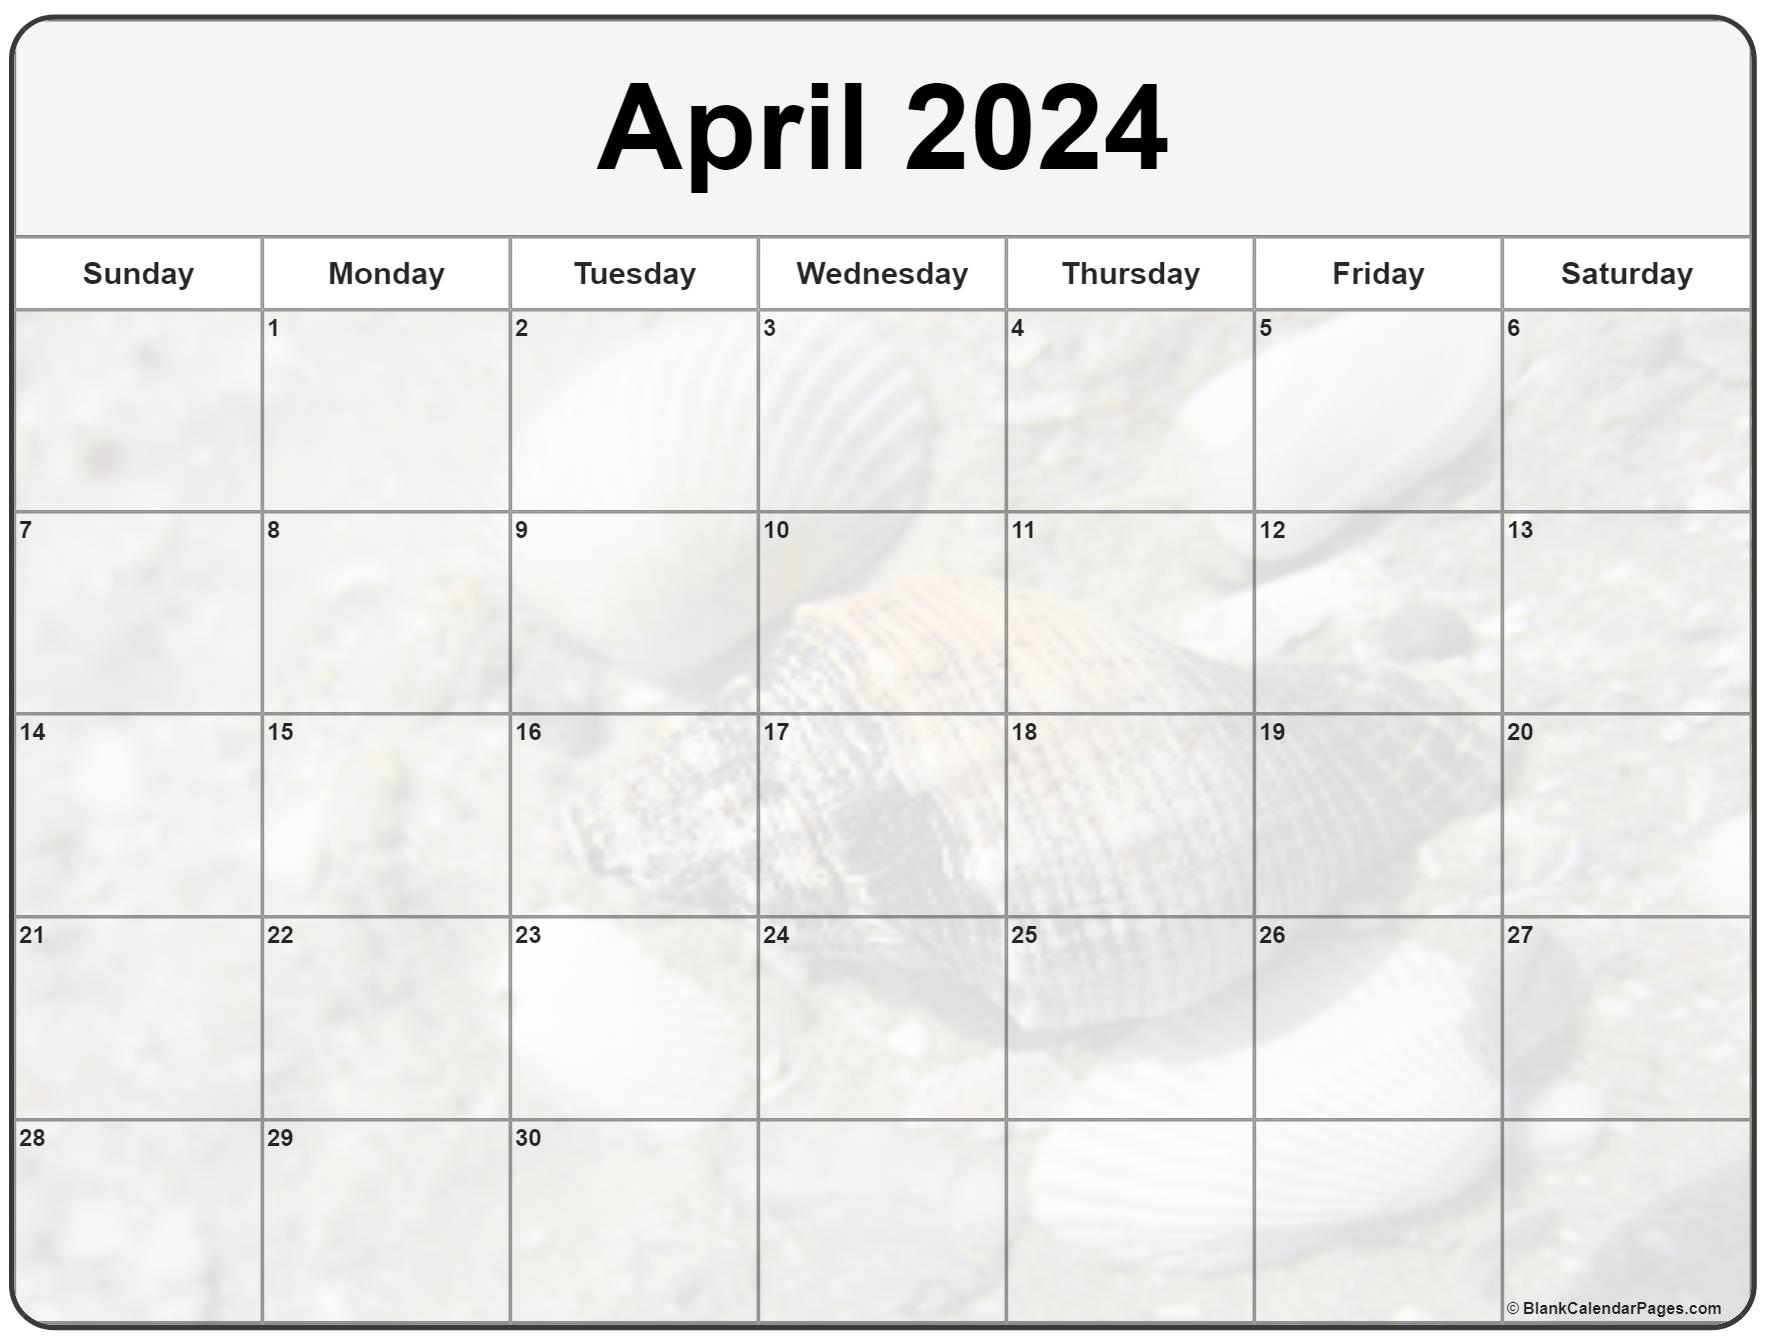 april-2023-calendar-free-printable-calendar-april-2023-calendar-free-printable-calendar-2023